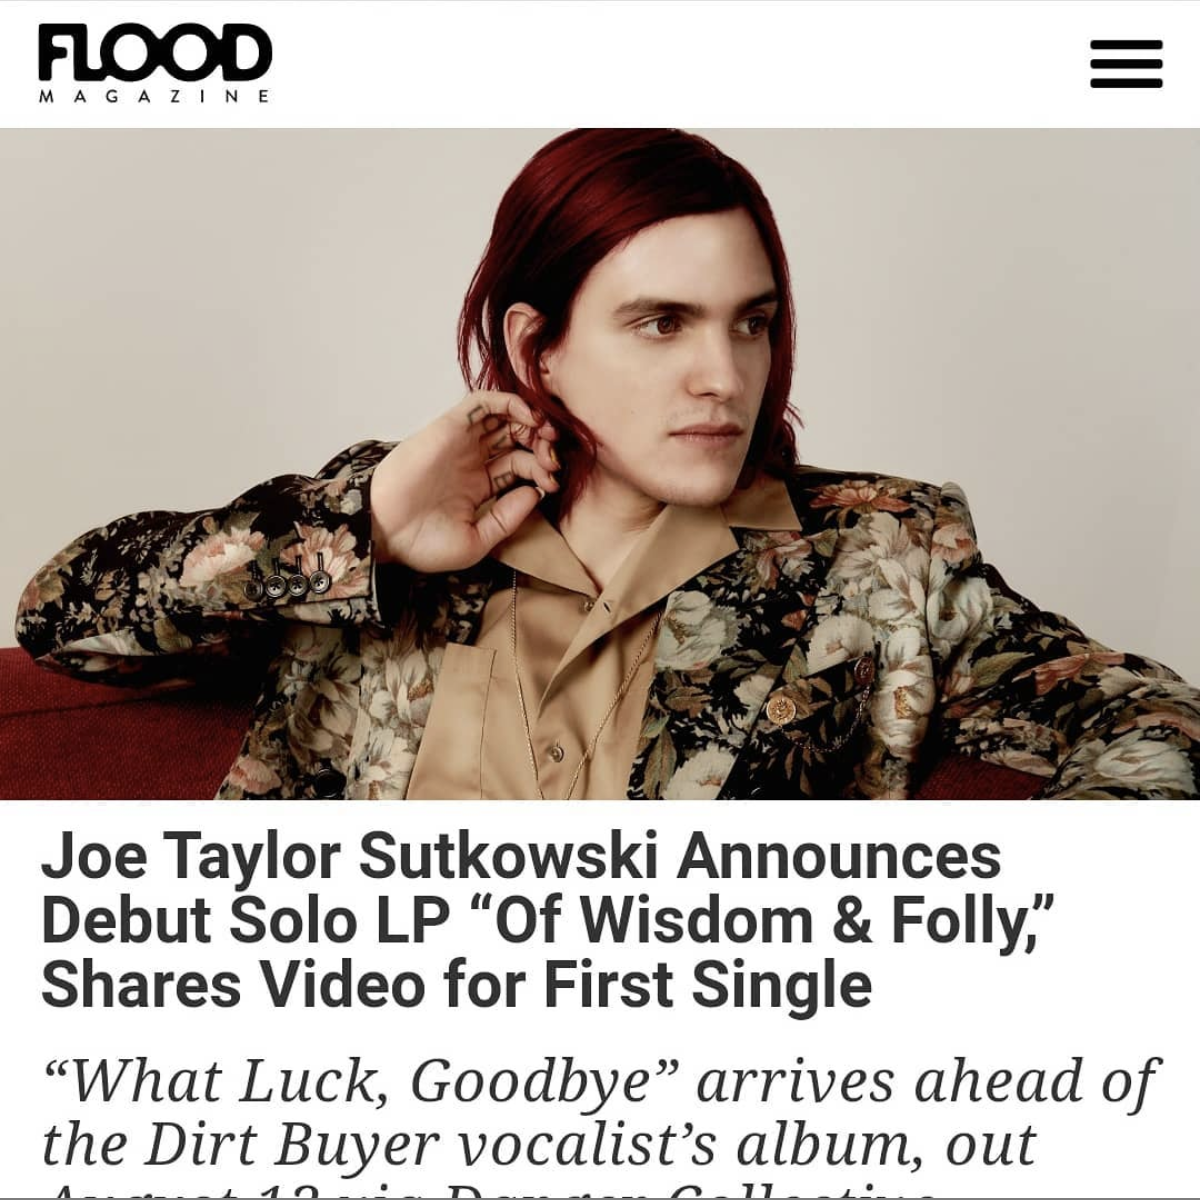 FLOOD Magazine: Joe Taylor Sutkowski Announces Debut Solo LP “Of Wisdom & Folly,” Shares Video for First Single